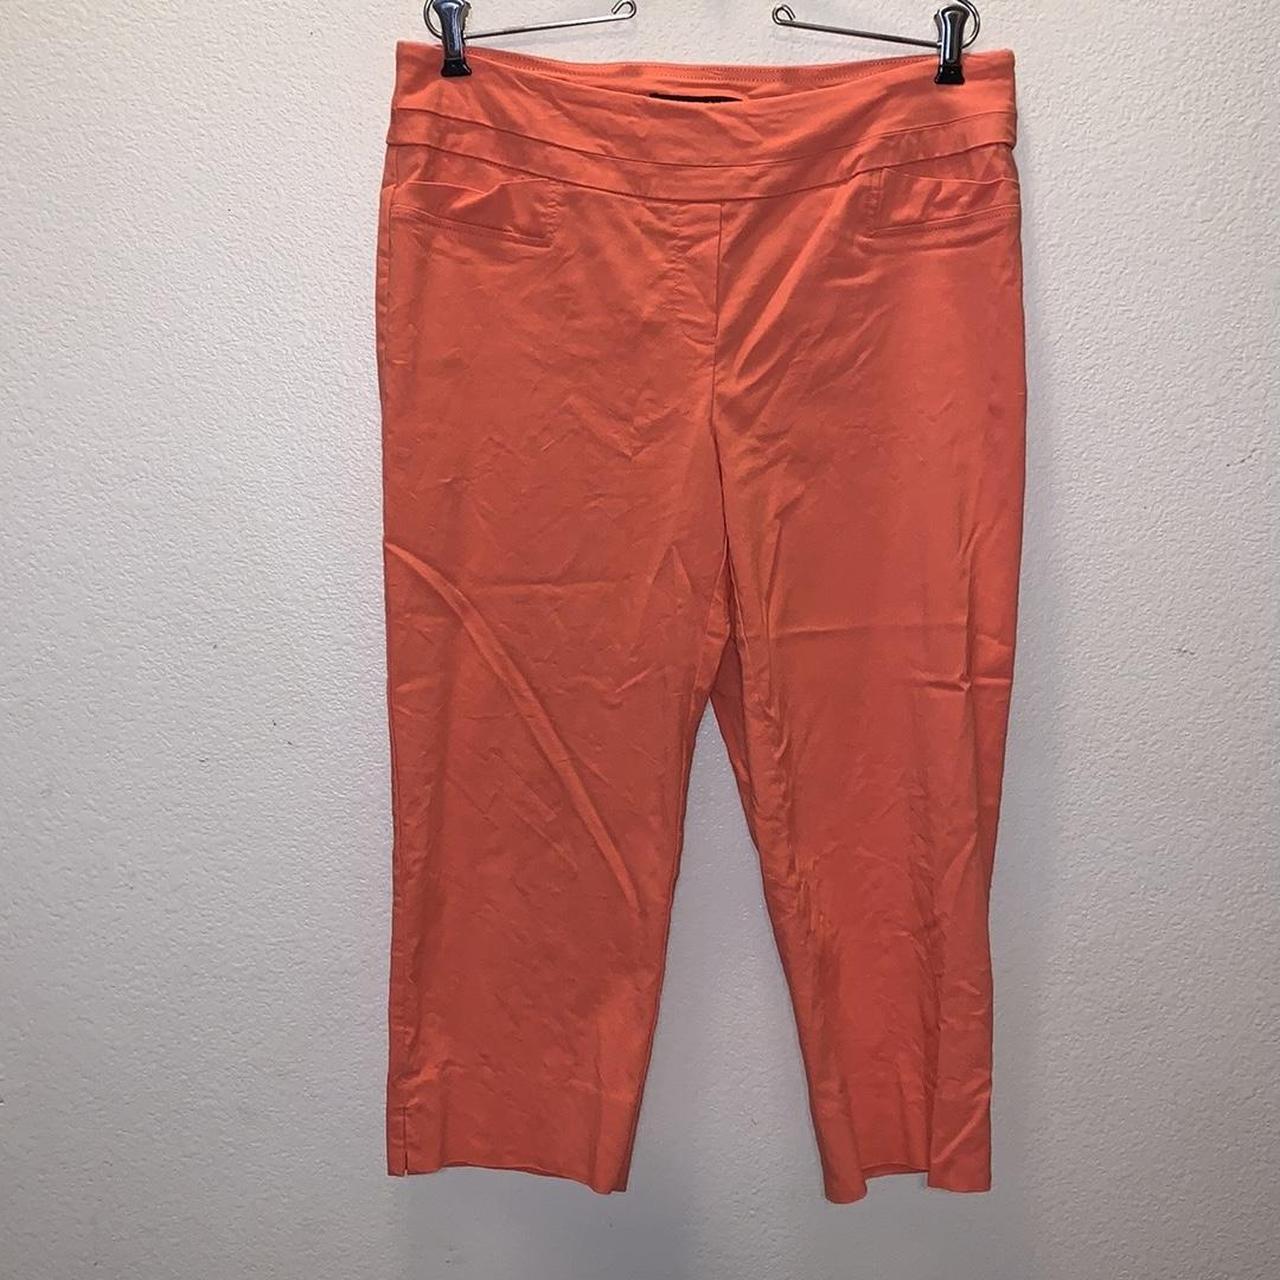 Zac & Rachel orange stretchy capri pants Size - Depop